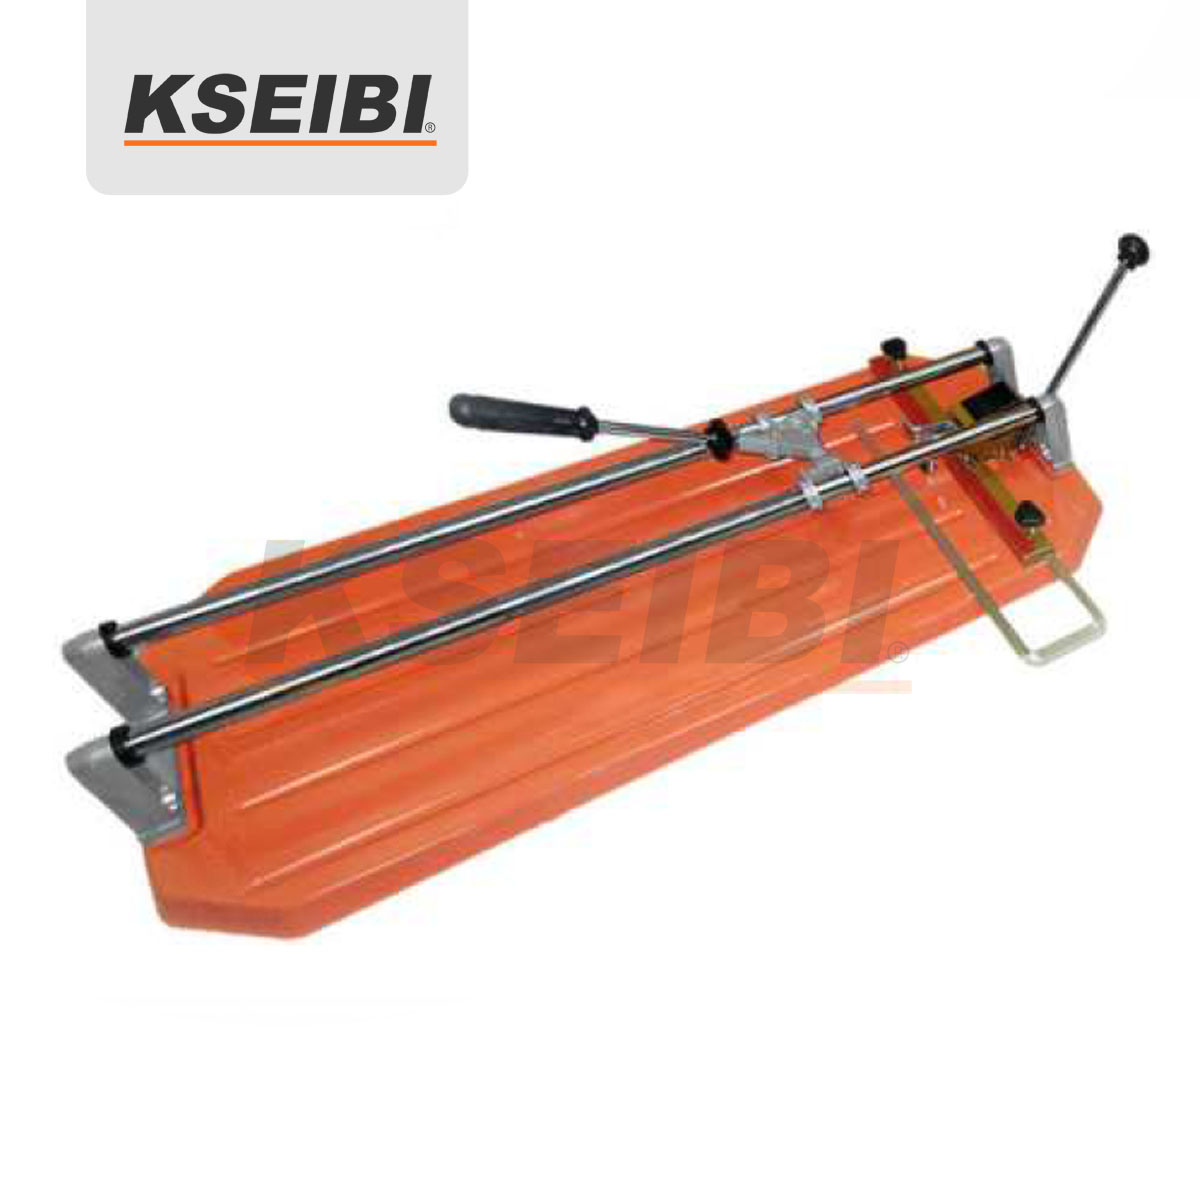 Kseibi- Spain Rubi Pattern Laser Tile Cutter